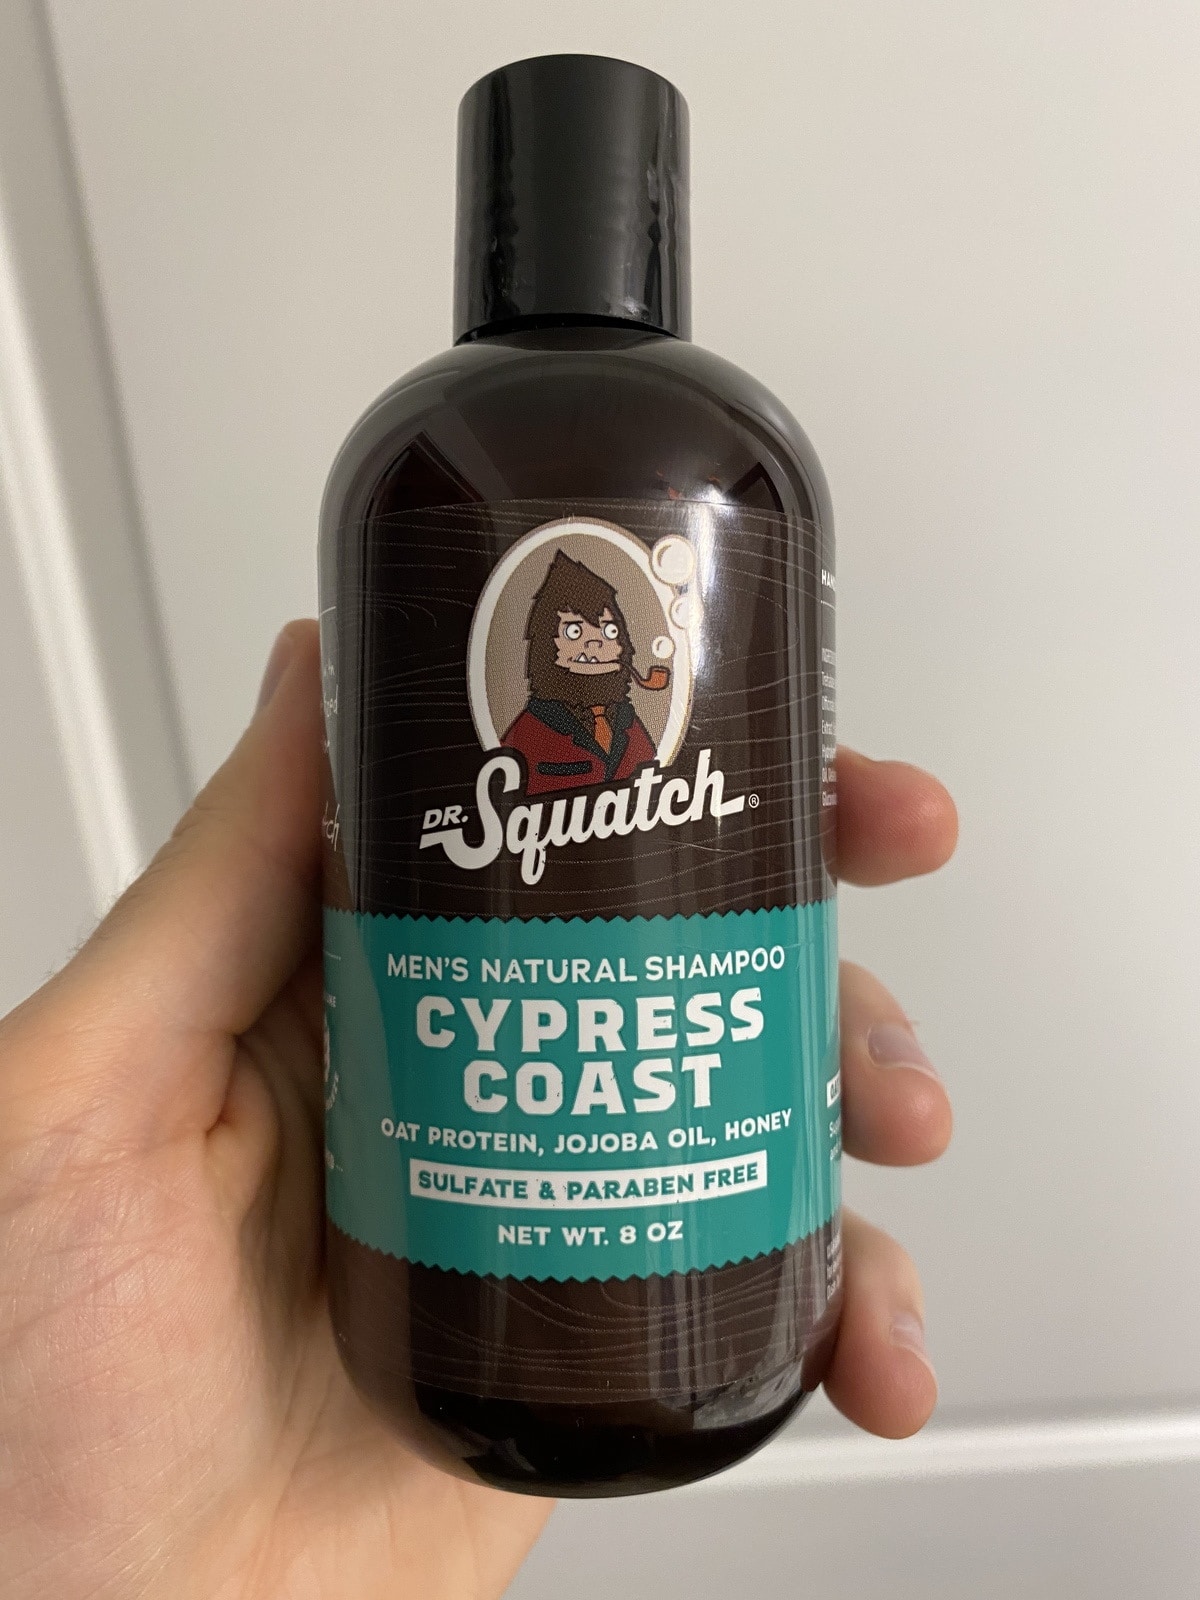 https://www.themodestman.com/wp-content/uploads/2022/03/Dr-Squatch-Shampoo-Cypress-Coast.jpeg